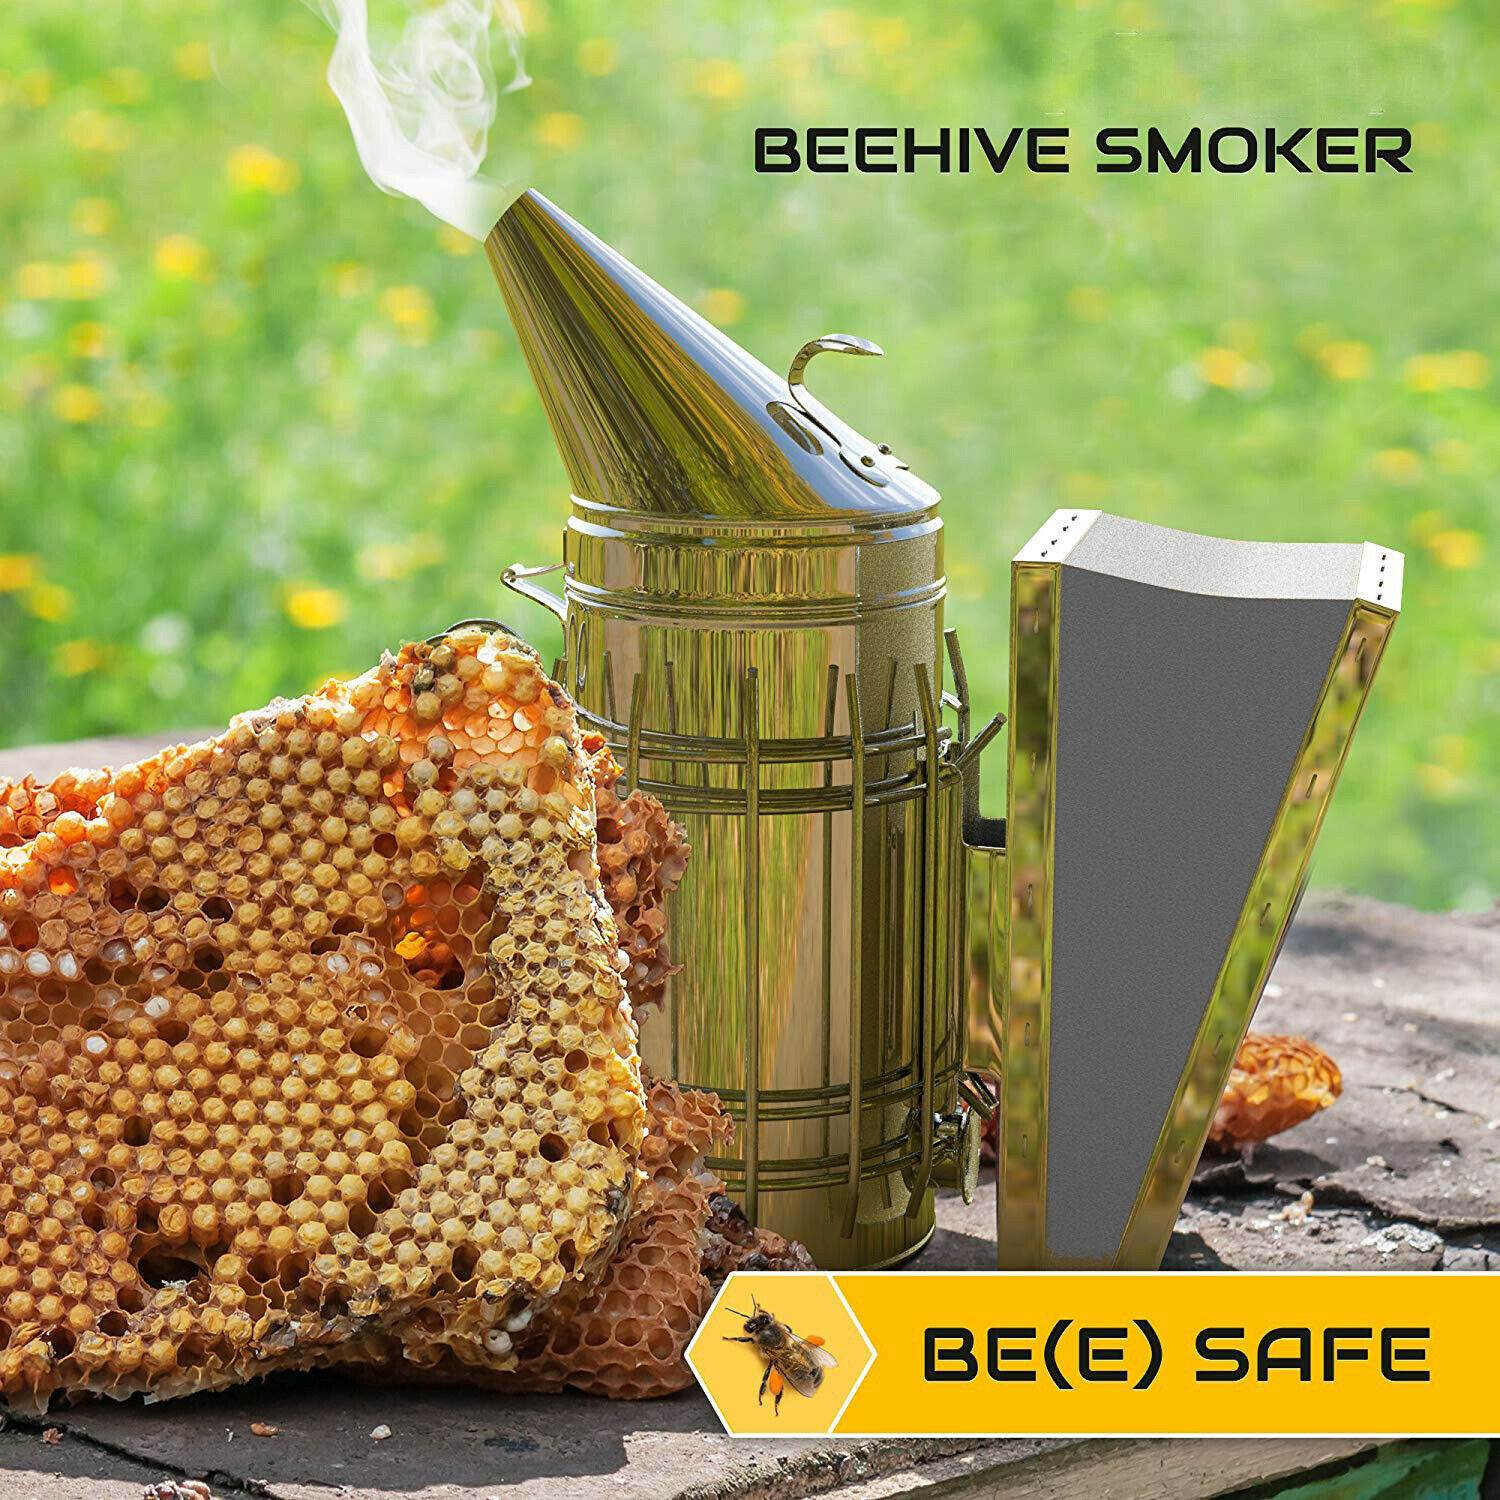 MagiDeal Beekeeping Hive Smoker Stainless Bee Hive Smoker Equipment 